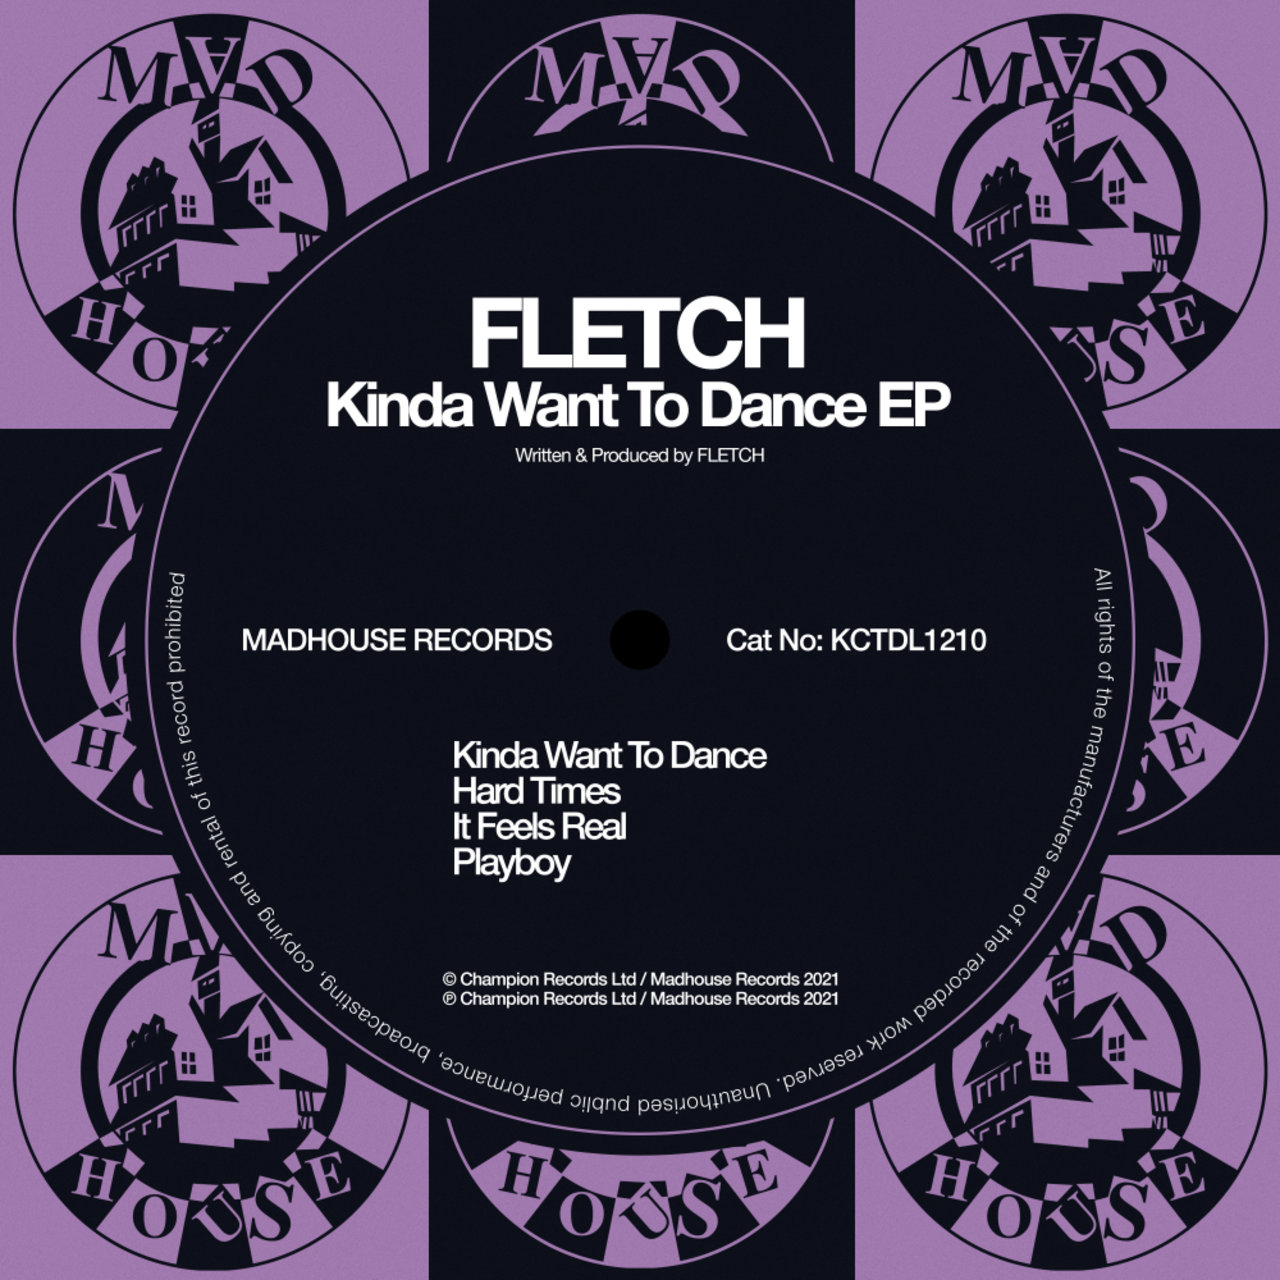 FLETCH (GB) - Kinda Want To Dance EP [KCTDL1210]